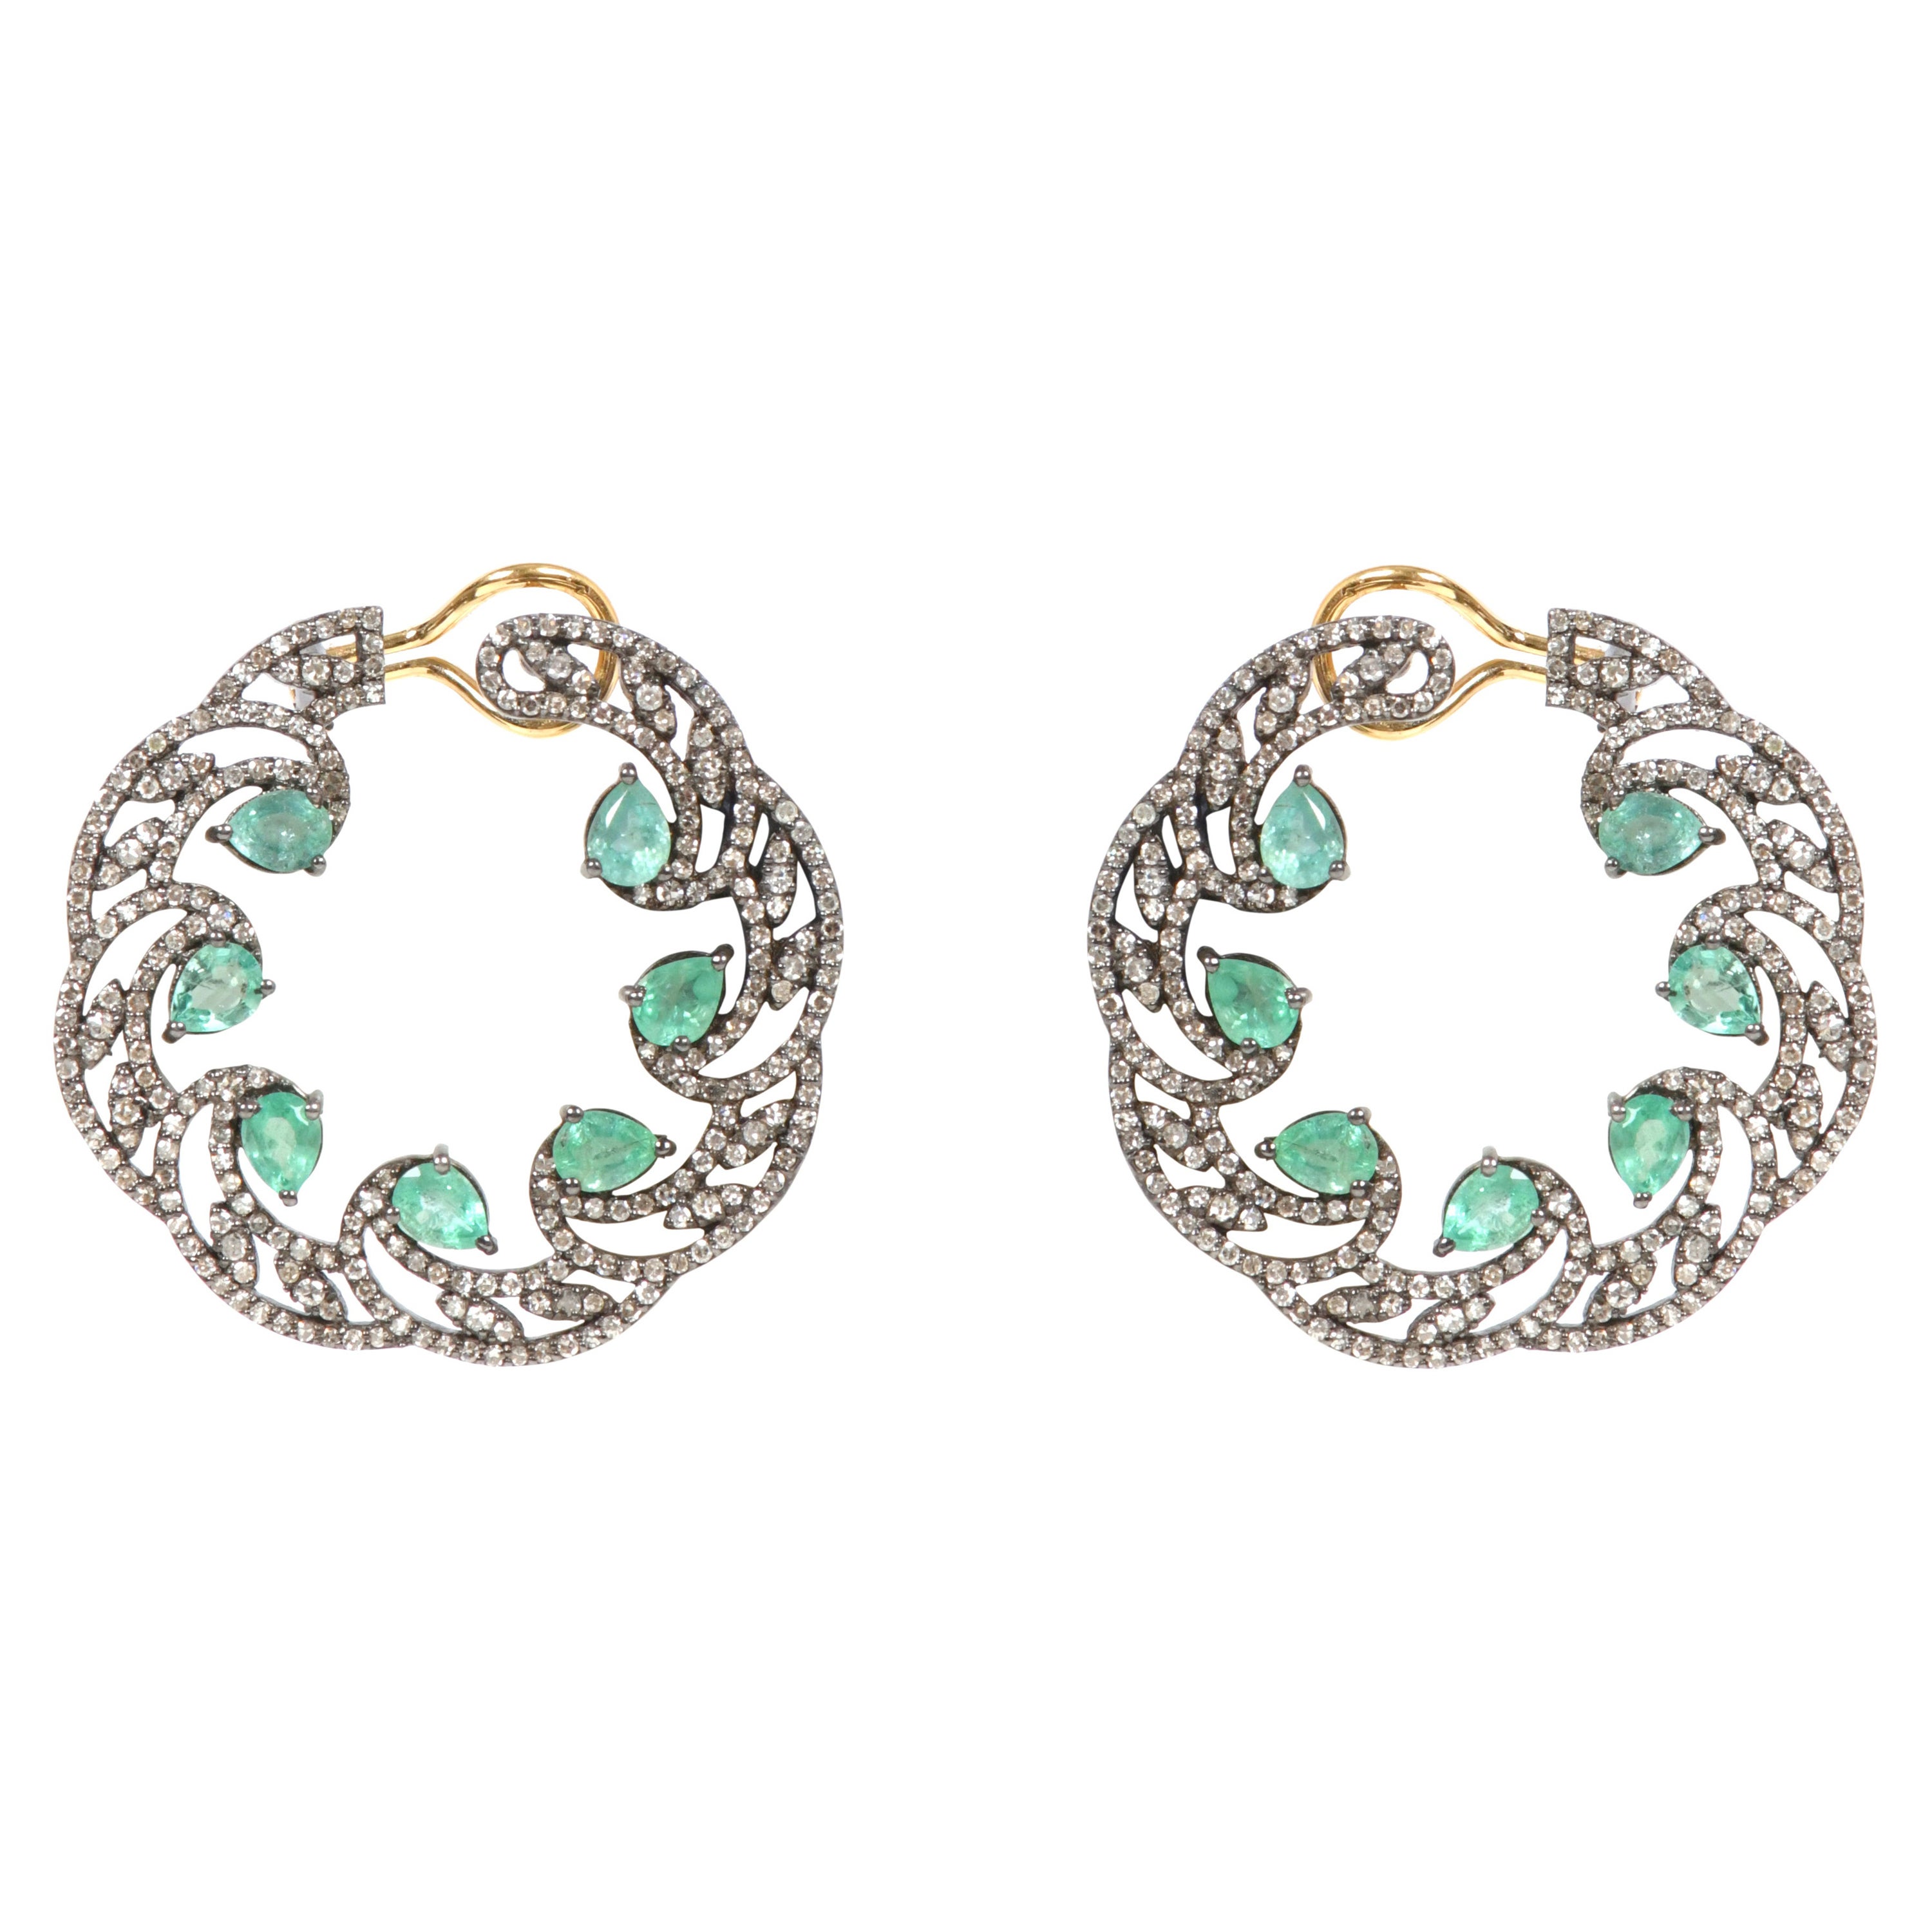 5.96 Carat Emerald and Diamond Modulation Hoop Earrings in Art-Deco Style